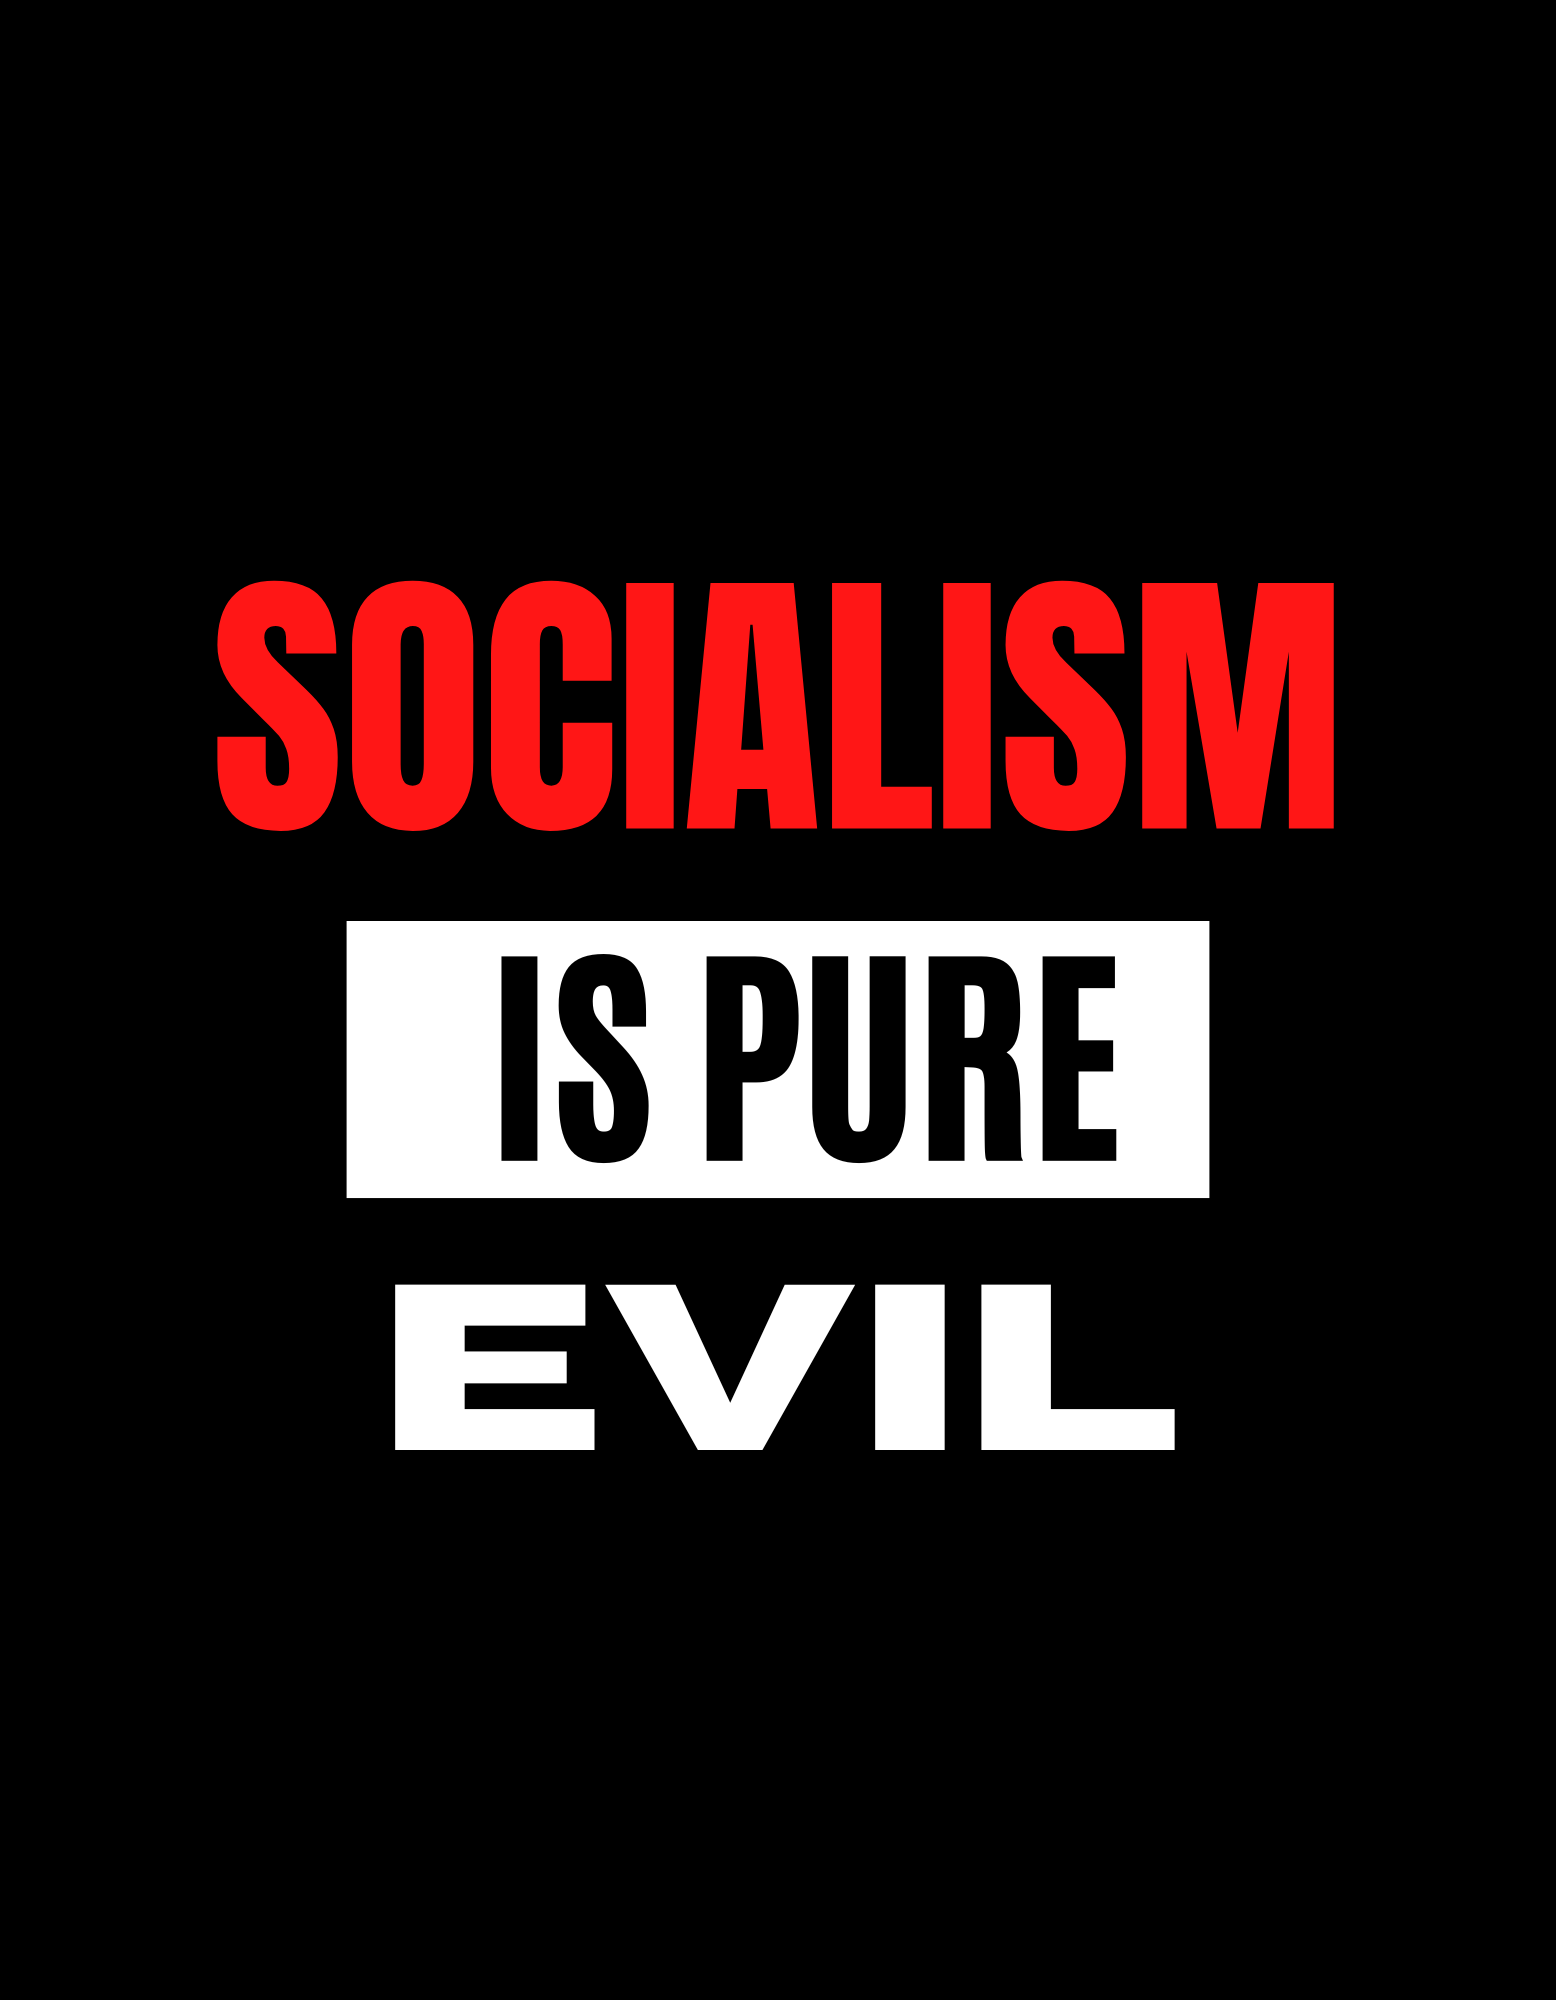 Socialism Is Pure Evil Sticker